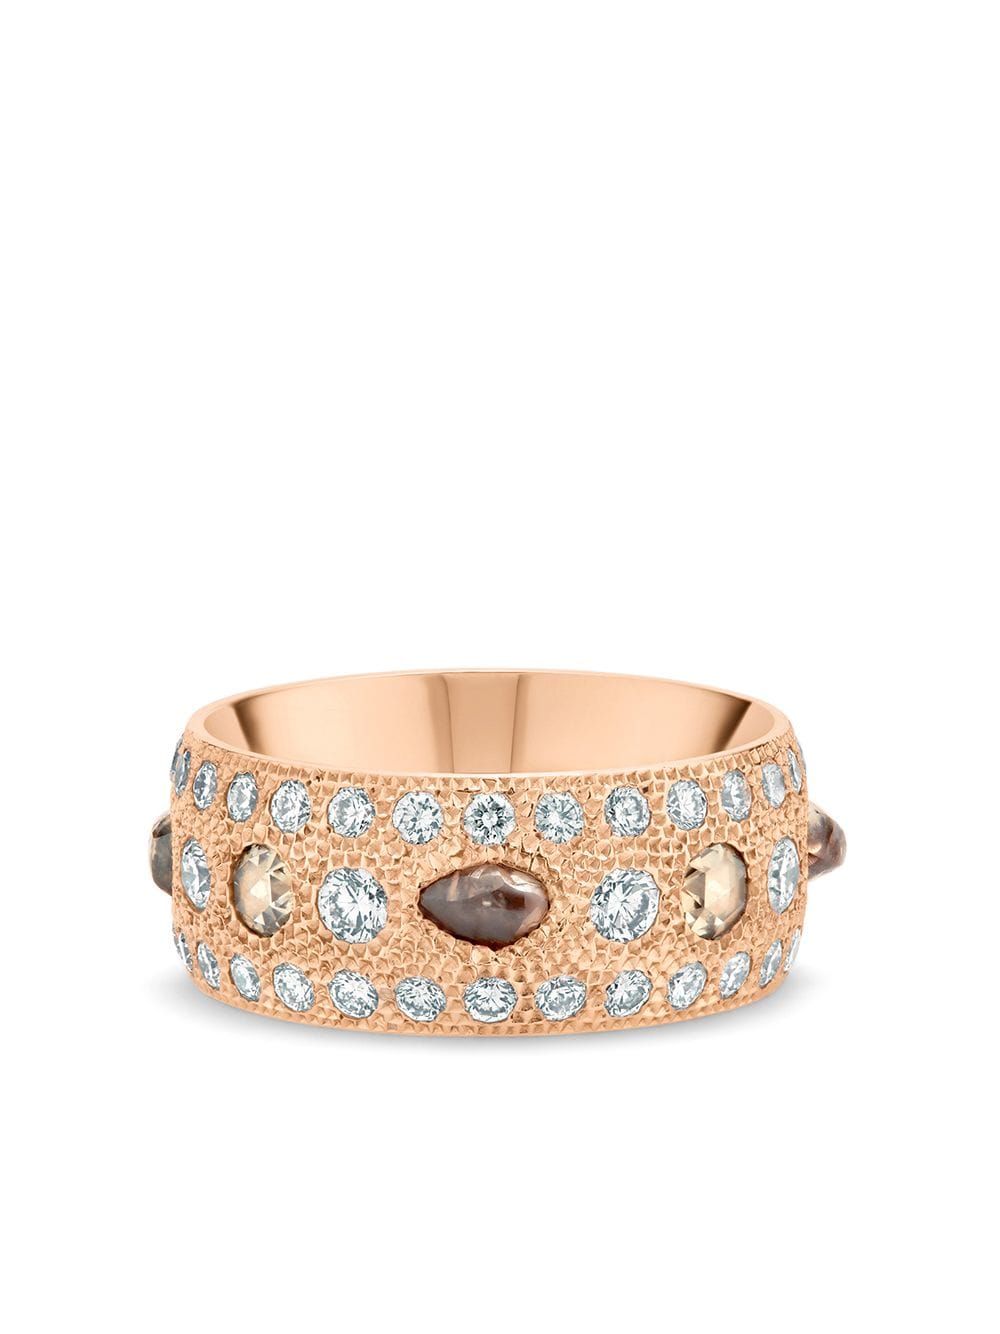 фото De beers кольцо talisman из розового золота с бриллиантами